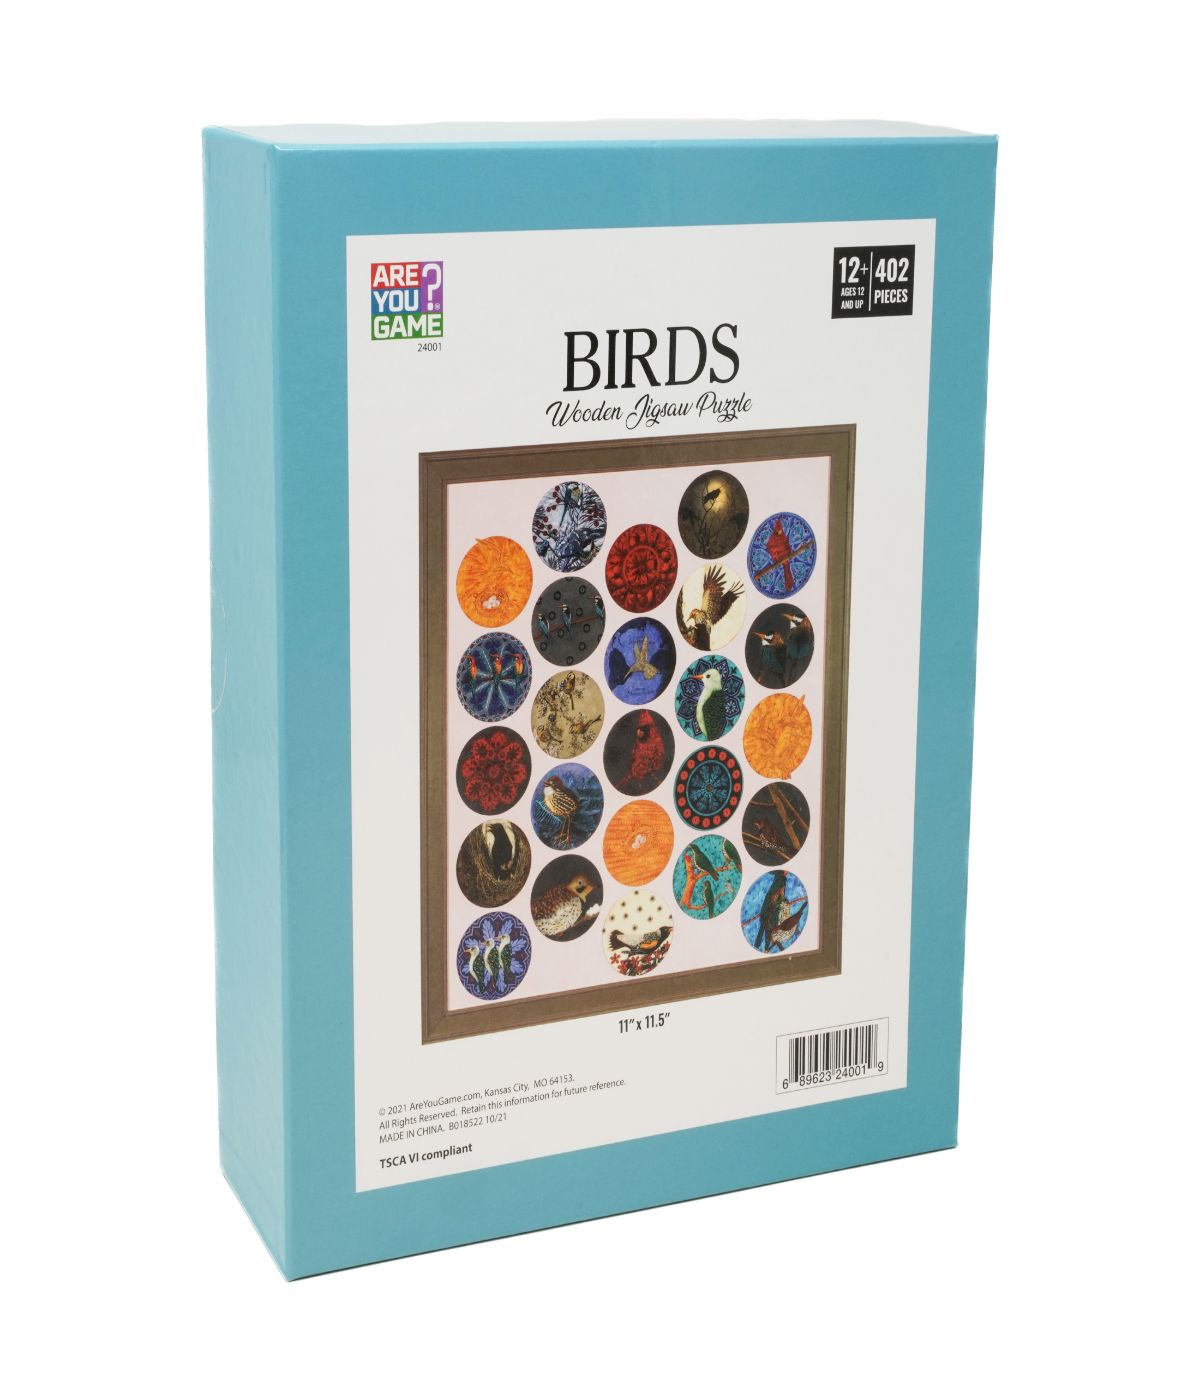 Wooden Jigsaw Puzzle - Birds: 402 Pcs Multi